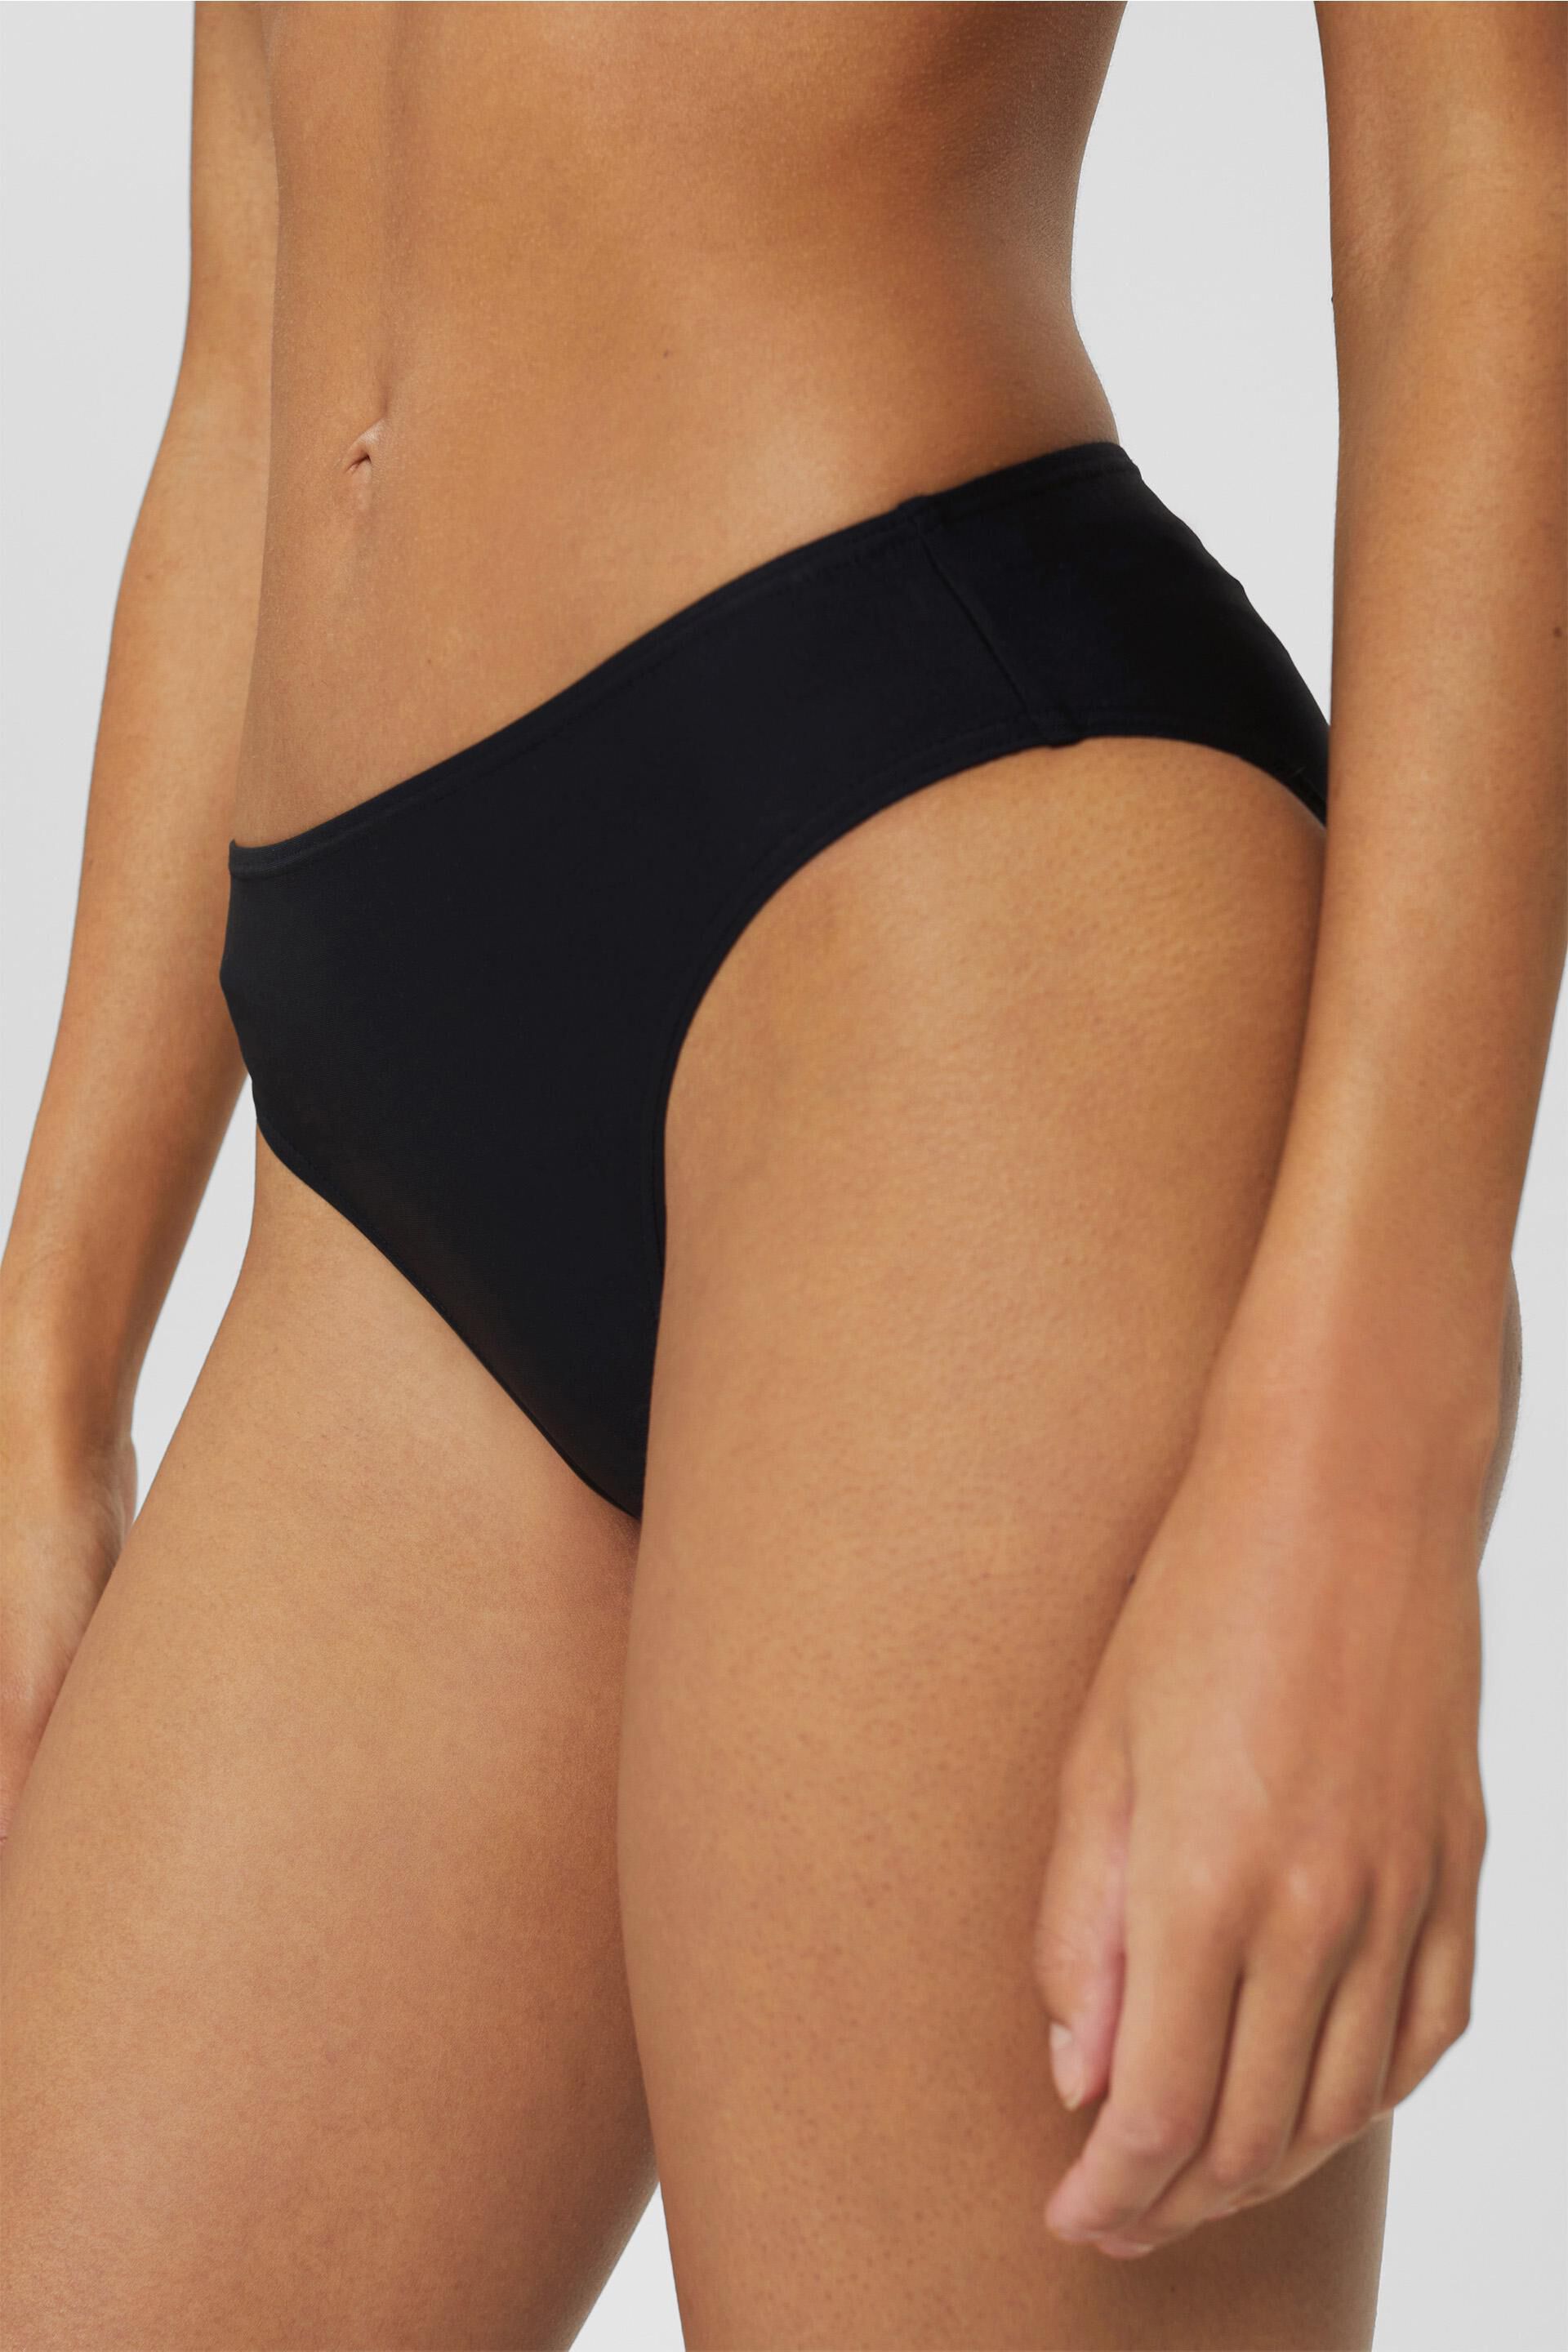 Esprit briefs plain bikini Recycled: